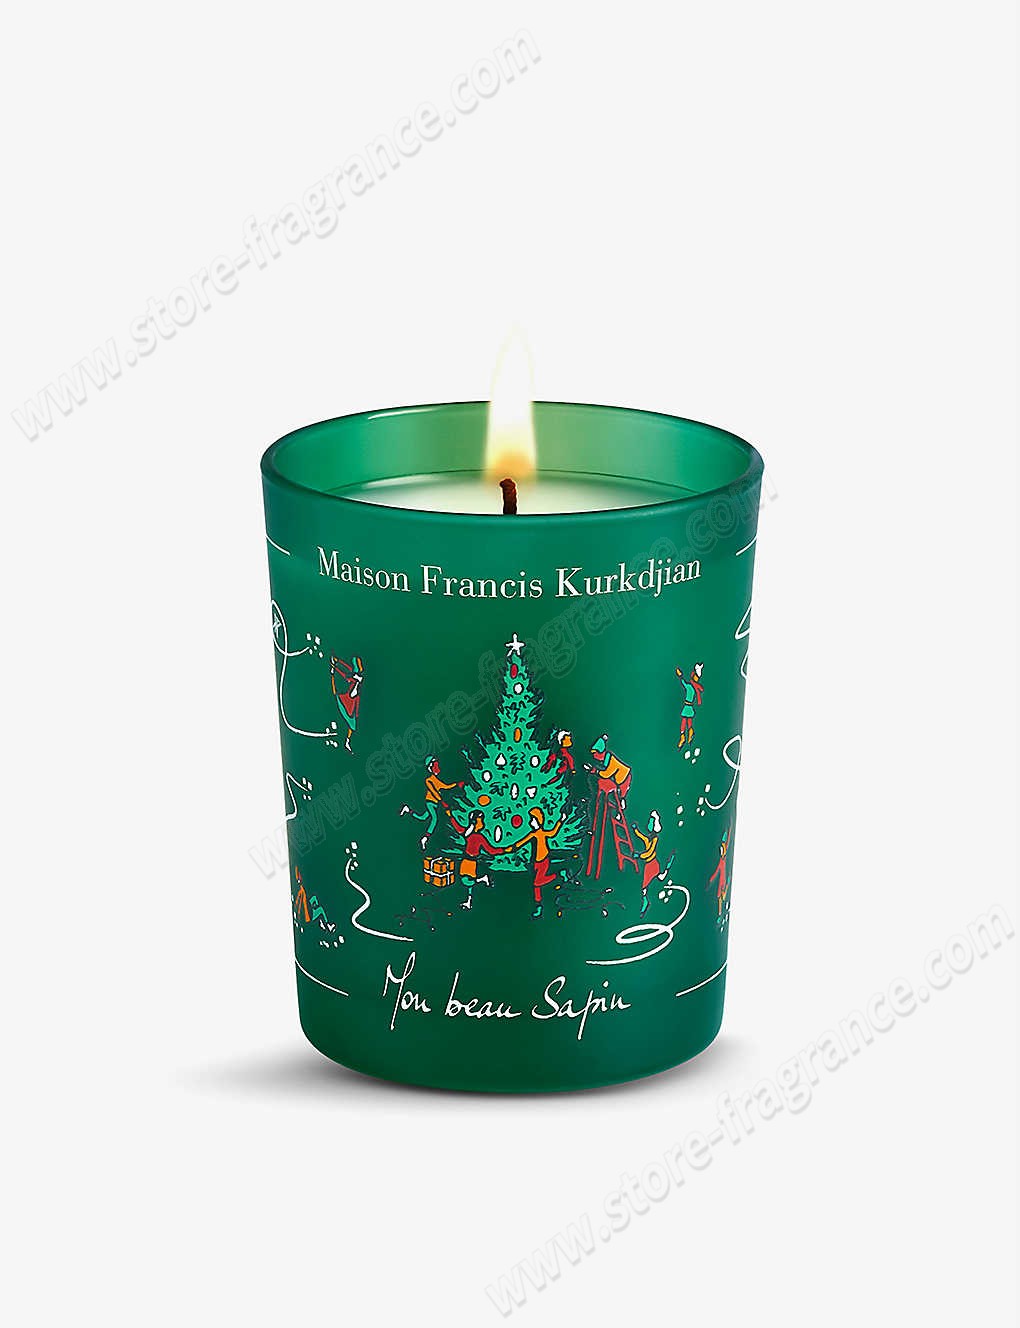 MAISON FRANCIS KURKDJIAN/Mon Beau Sapin scented candle 190g ✿ Discount Store - MAISON FRANCIS KURKDJIAN/Mon Beau Sapin scented candle 190g ✿ Discount Store